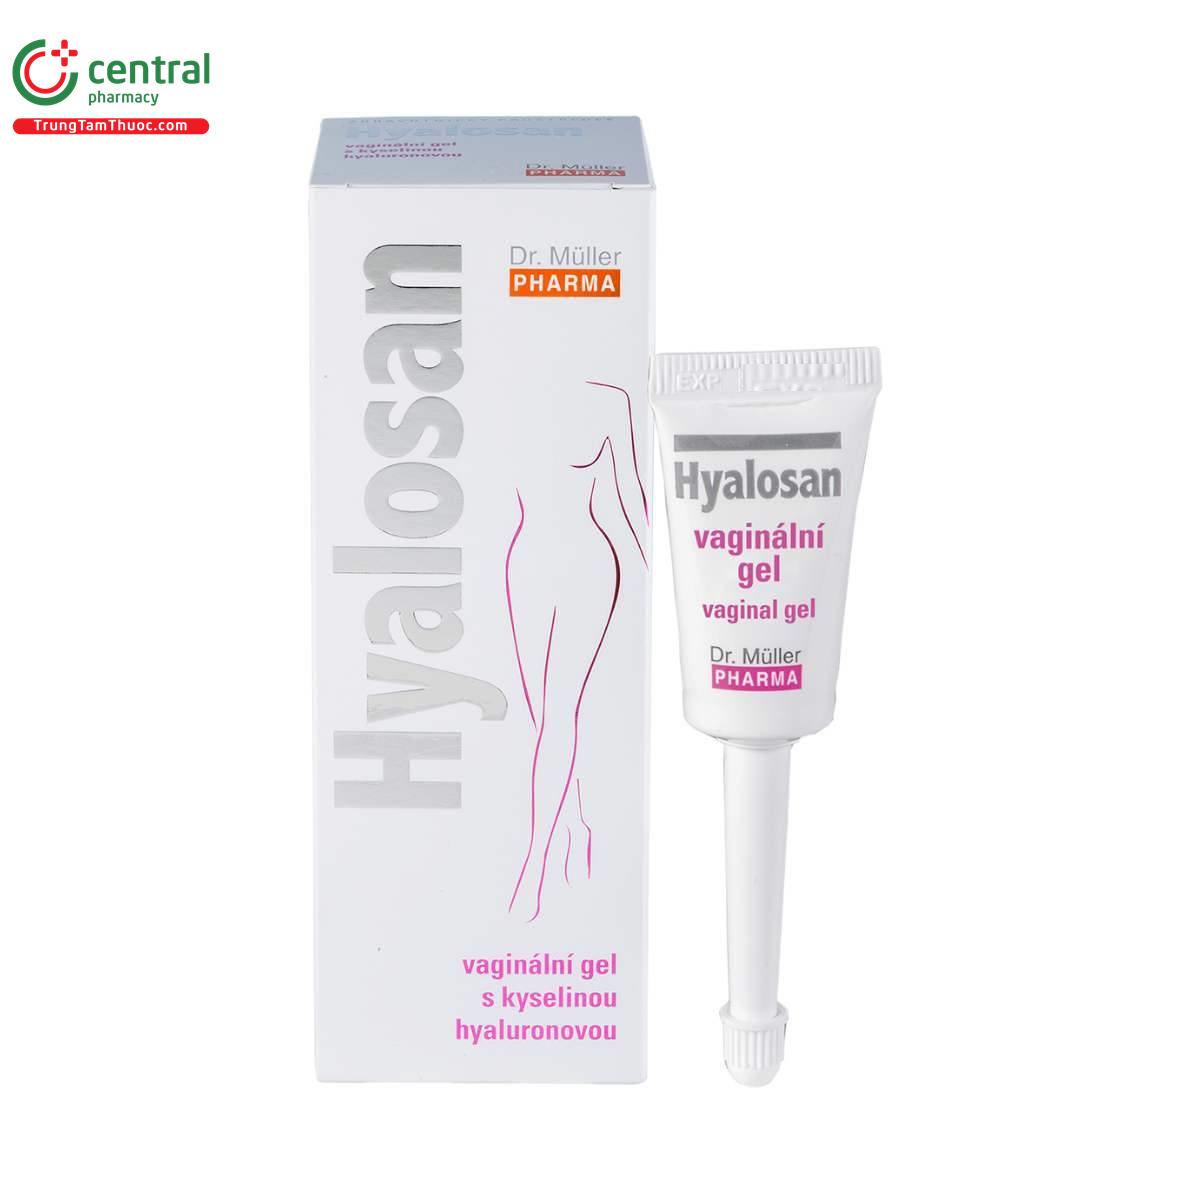 hyalosan vaginal gel 1 I3407